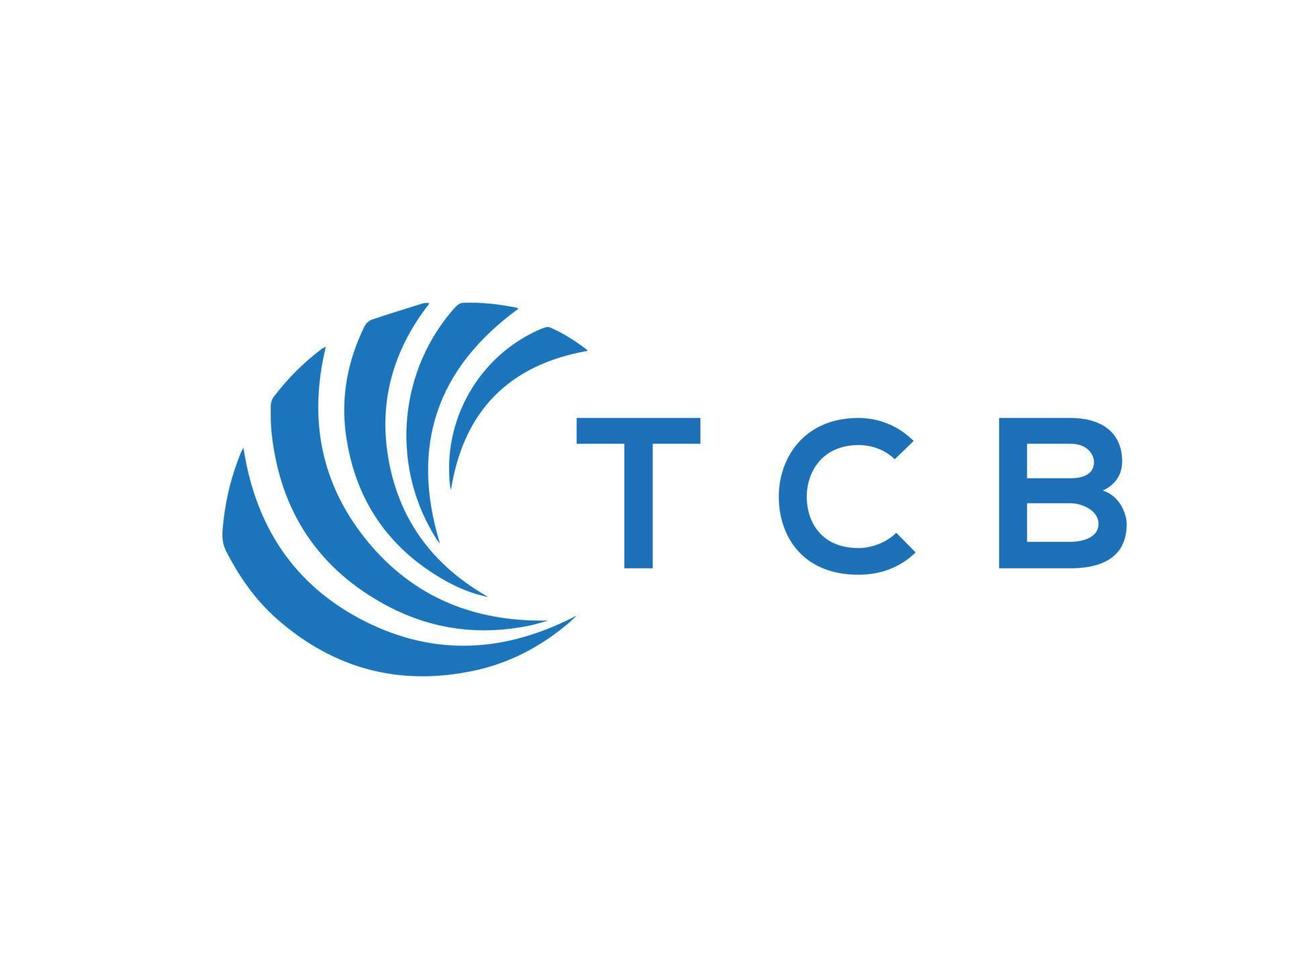 tcb brev logotyp design på vit bakgrund. tcb kreativ cirkel brev logotyp begrepp. tcb brev design. vektor